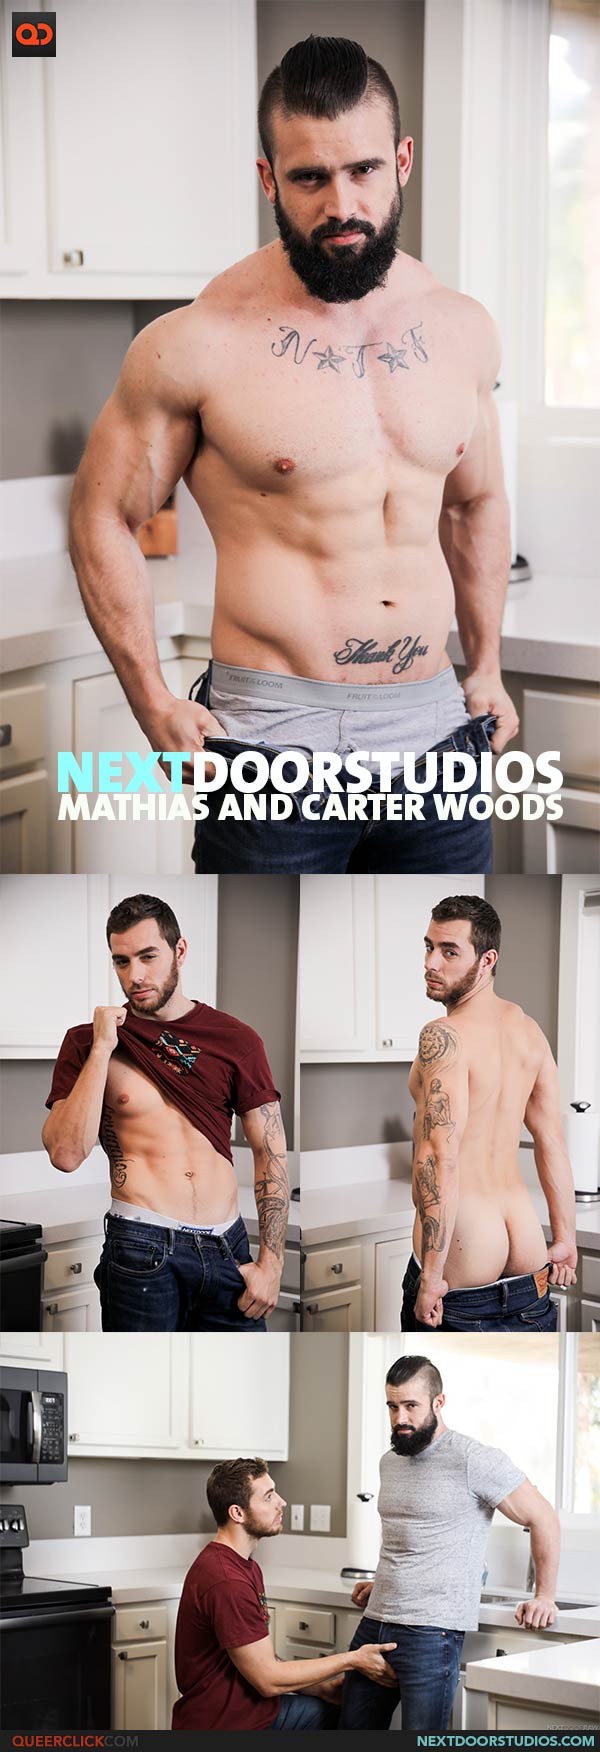 Next Door Studios:  Mathias and Carter Woods